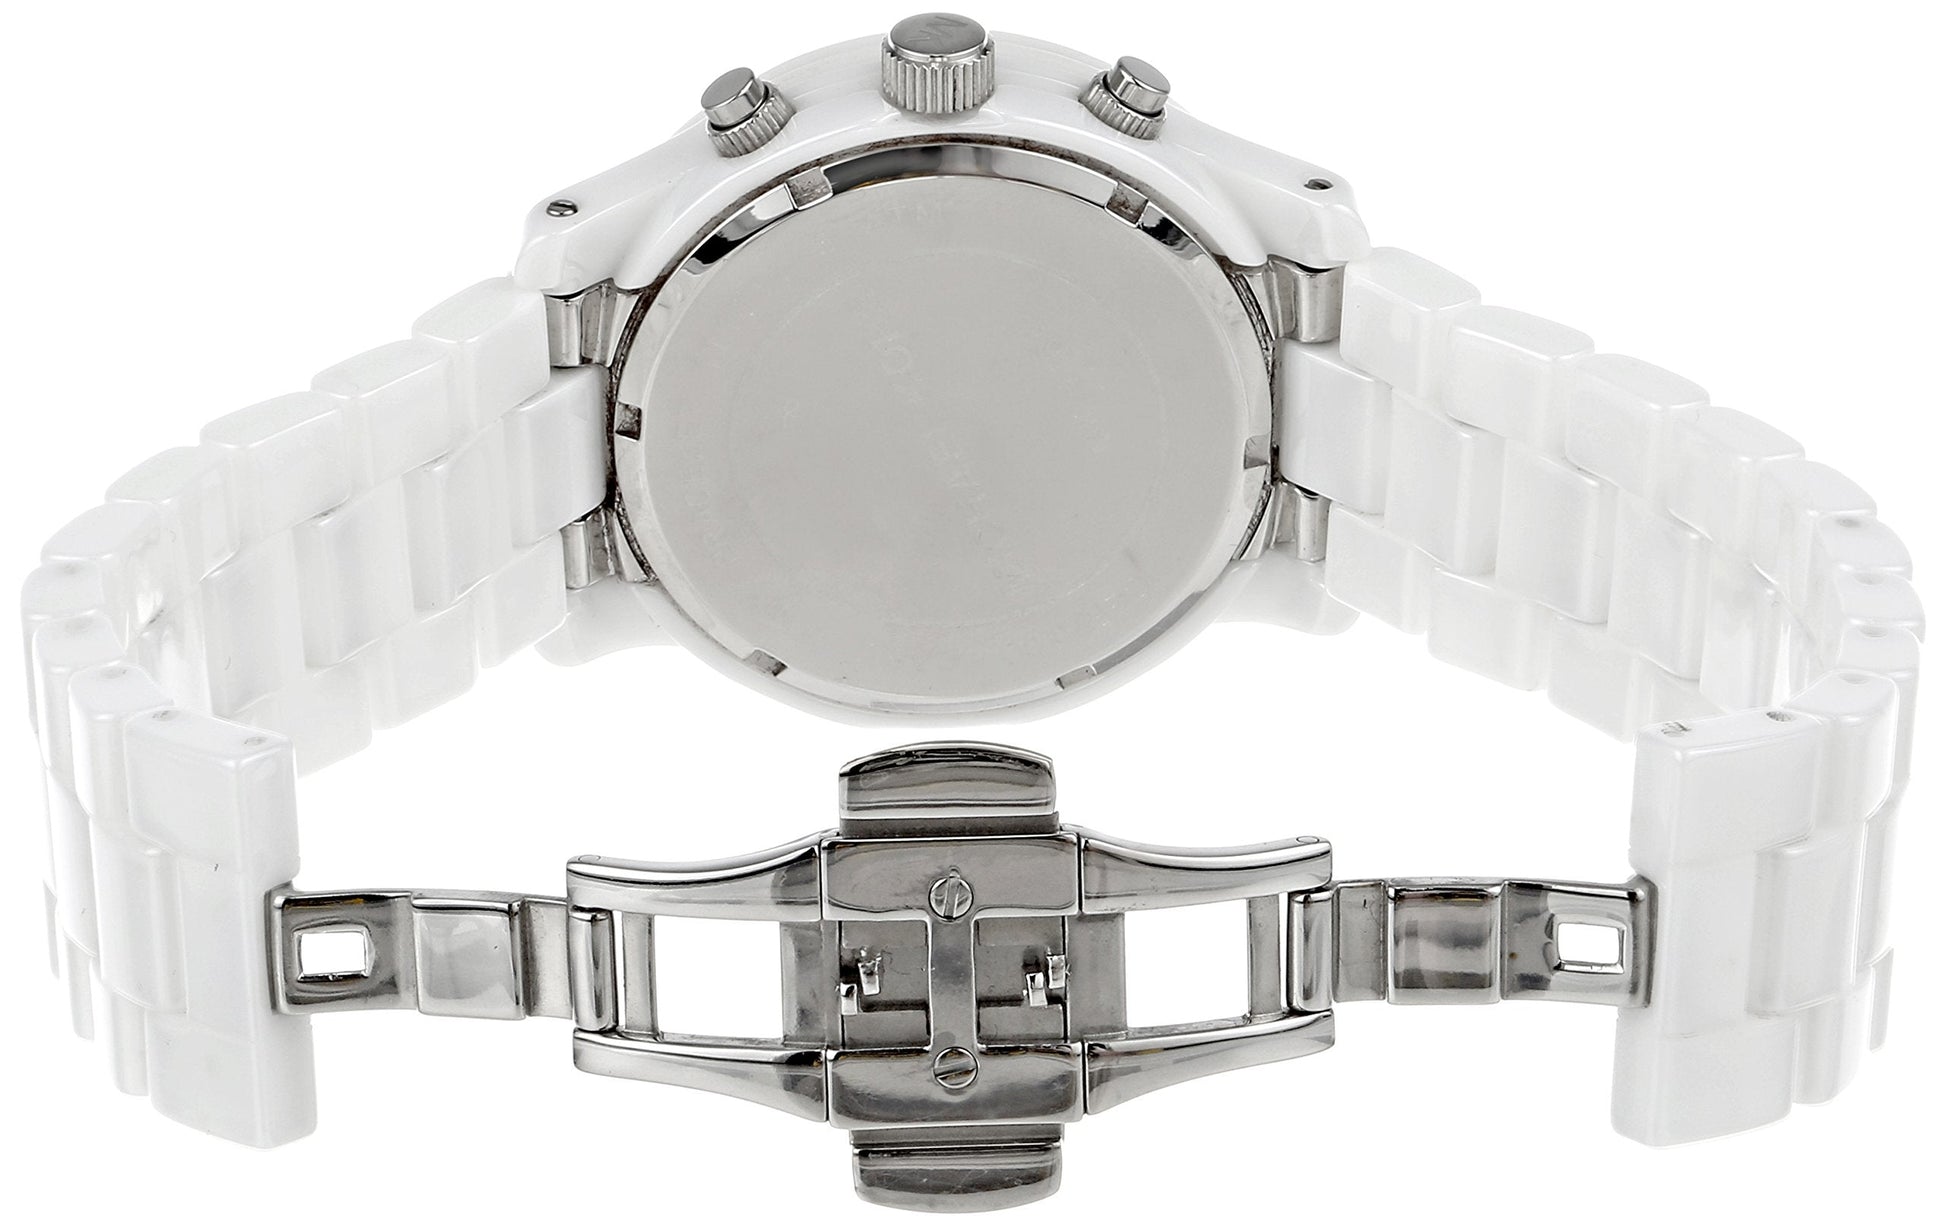 Michael Kors Runway Ceramic White Dial White Steel Strap Watch for Women - MK5161